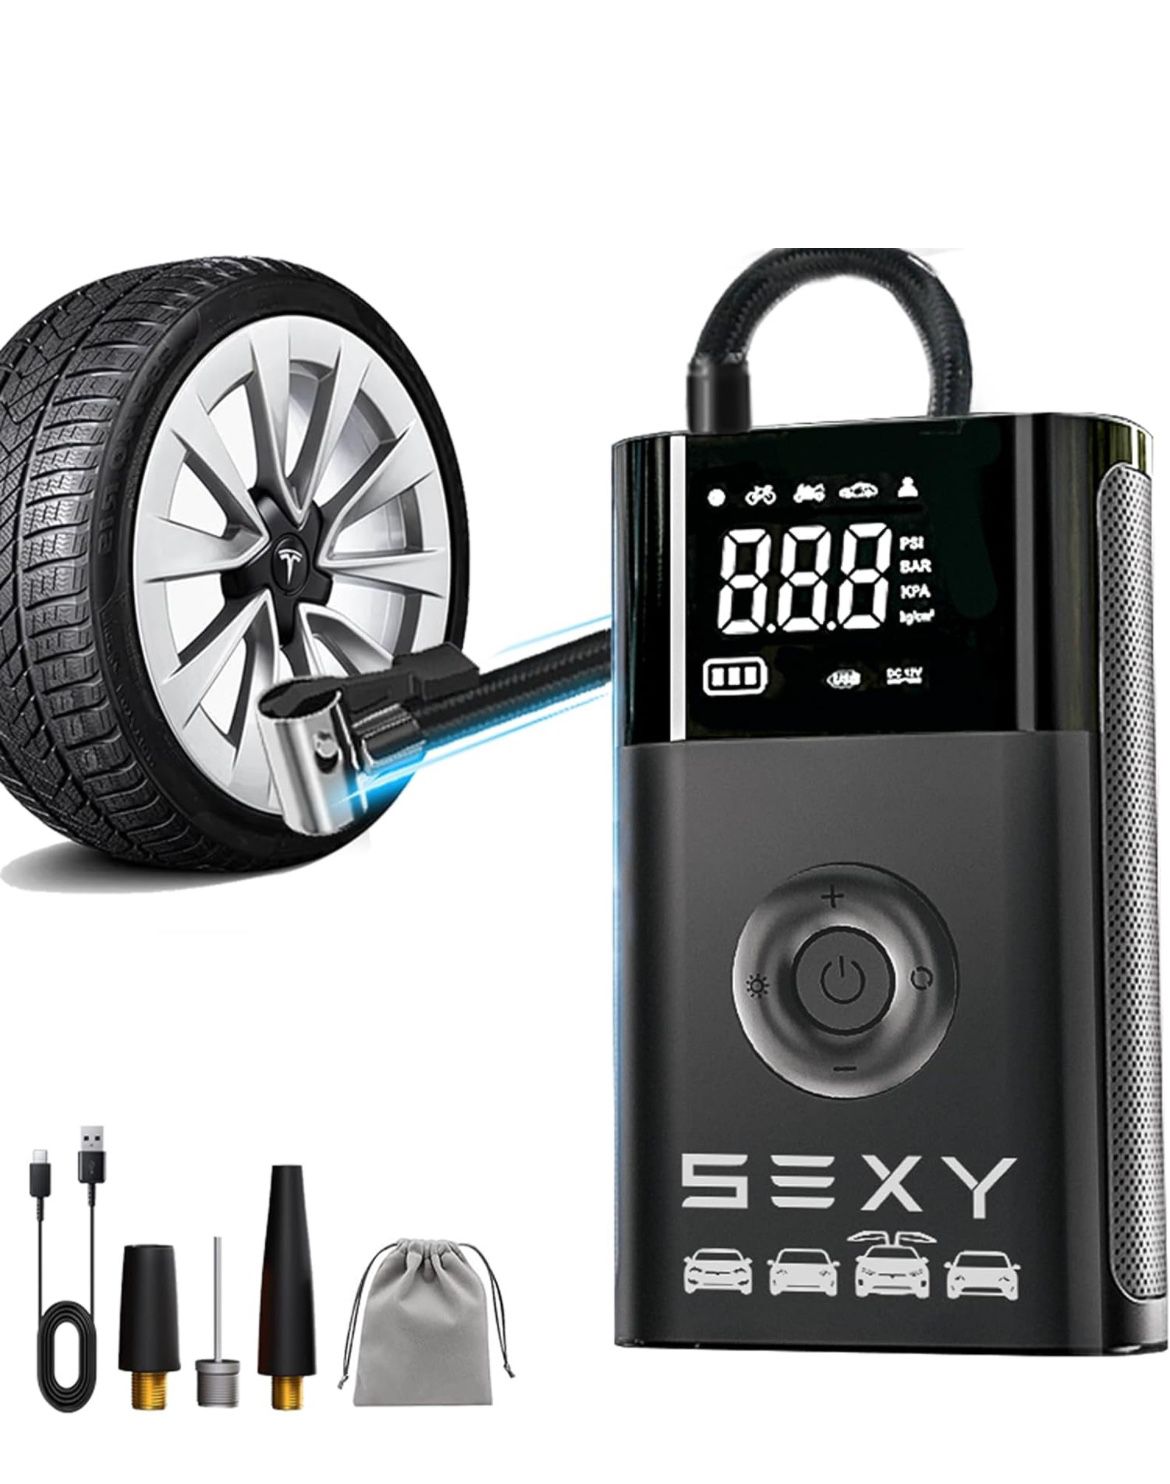 VINBYEE Tire Inflator Air Compressor for Tesla Model 3 Y X S,Cordless Portable Air Pump